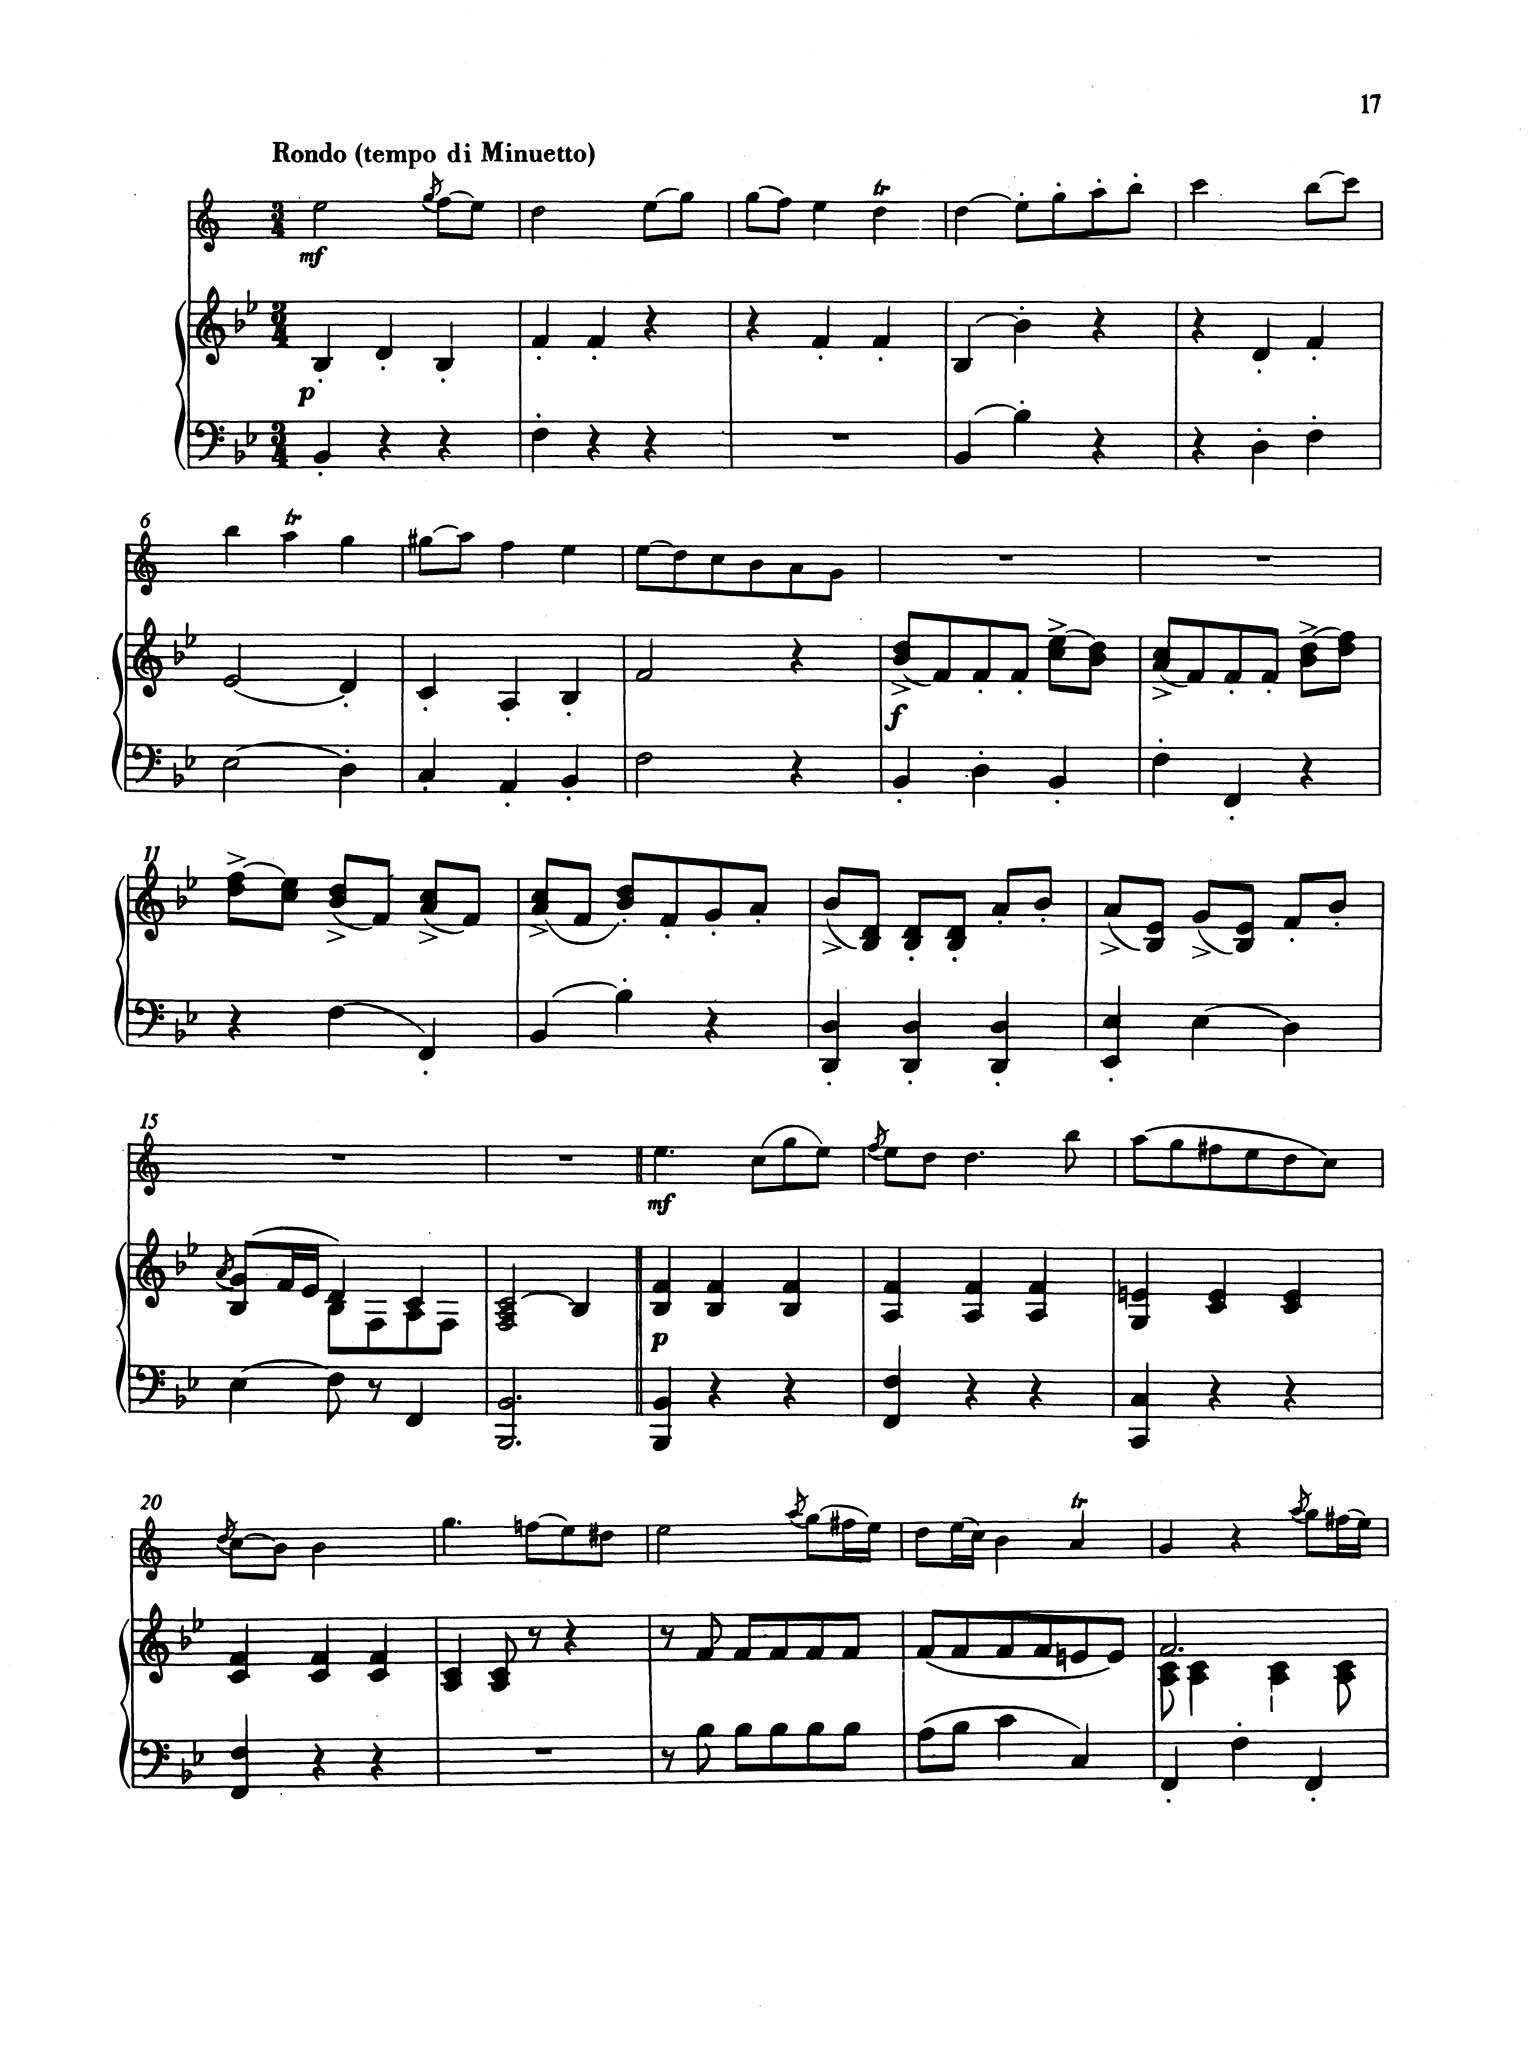 Clarinet Concerto No. 9 (Kaiser) in B-flat Major - Movement 3